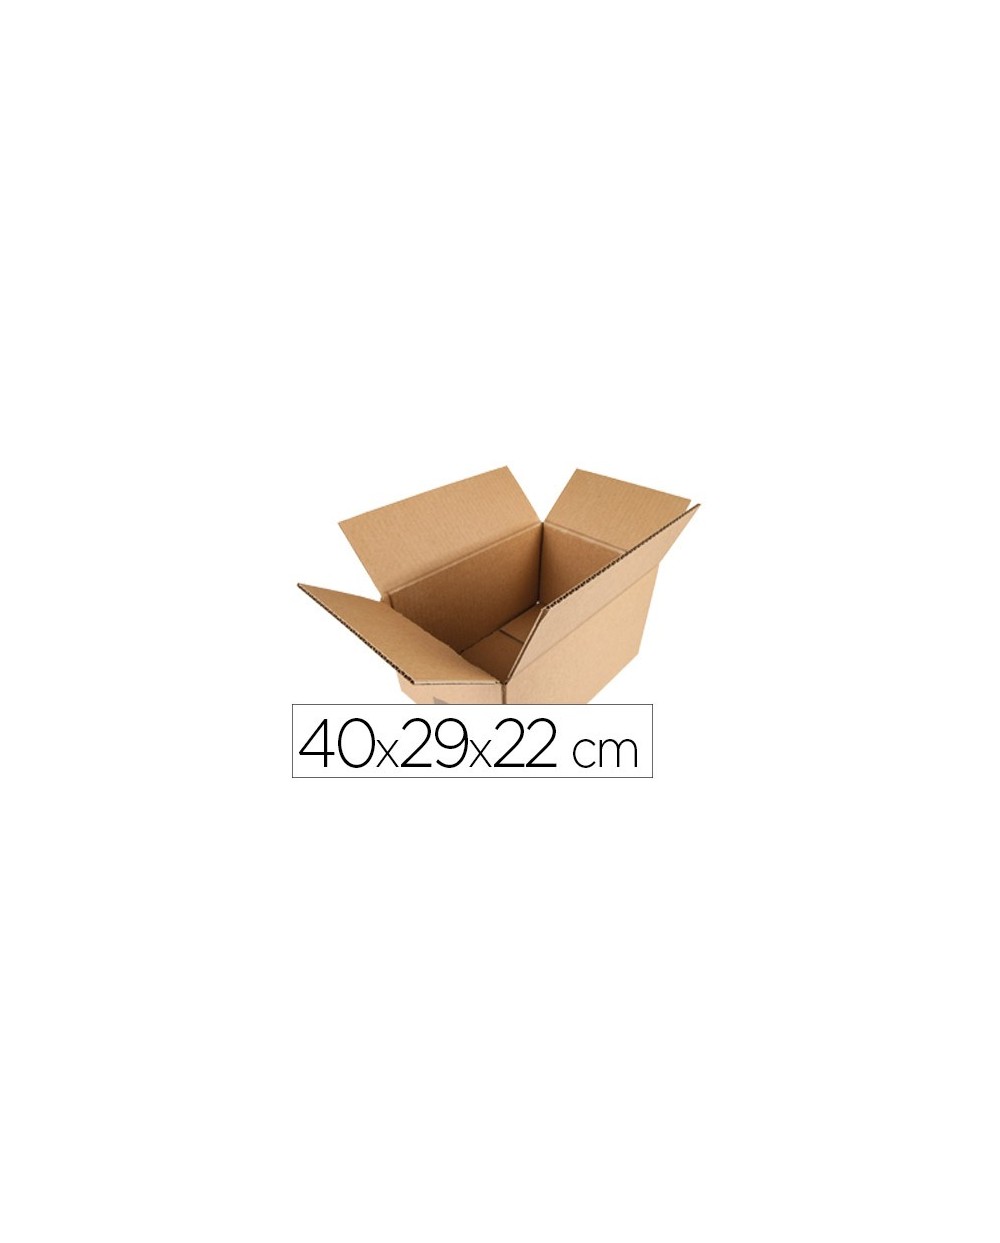 Caja para embalar q connect americana medidas 400x290x220 mm espesor carton 5 mm